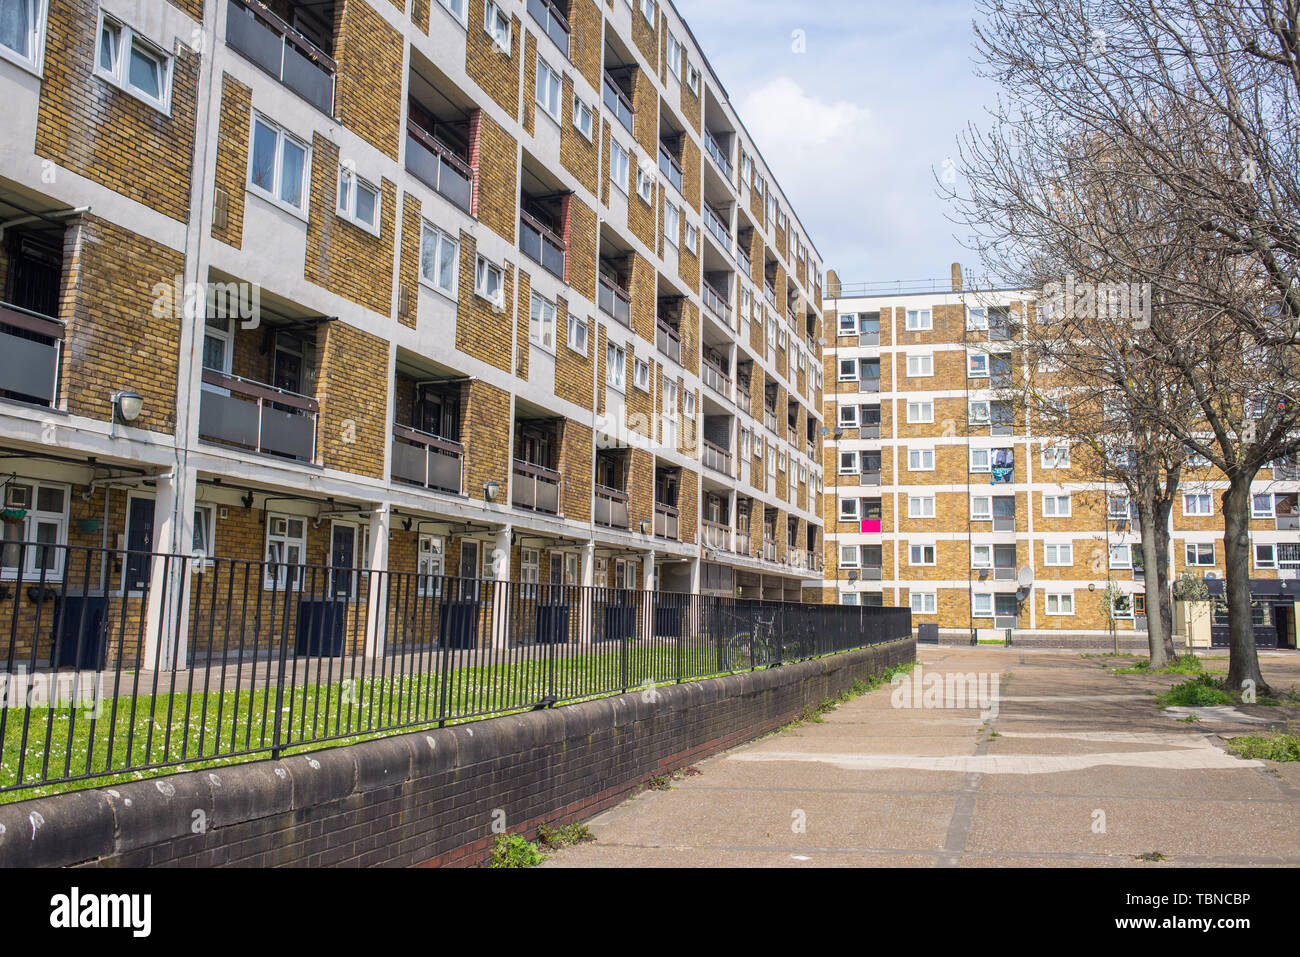 Council houses apartment blocks estate in Hackney East London, UK. Stock Photo